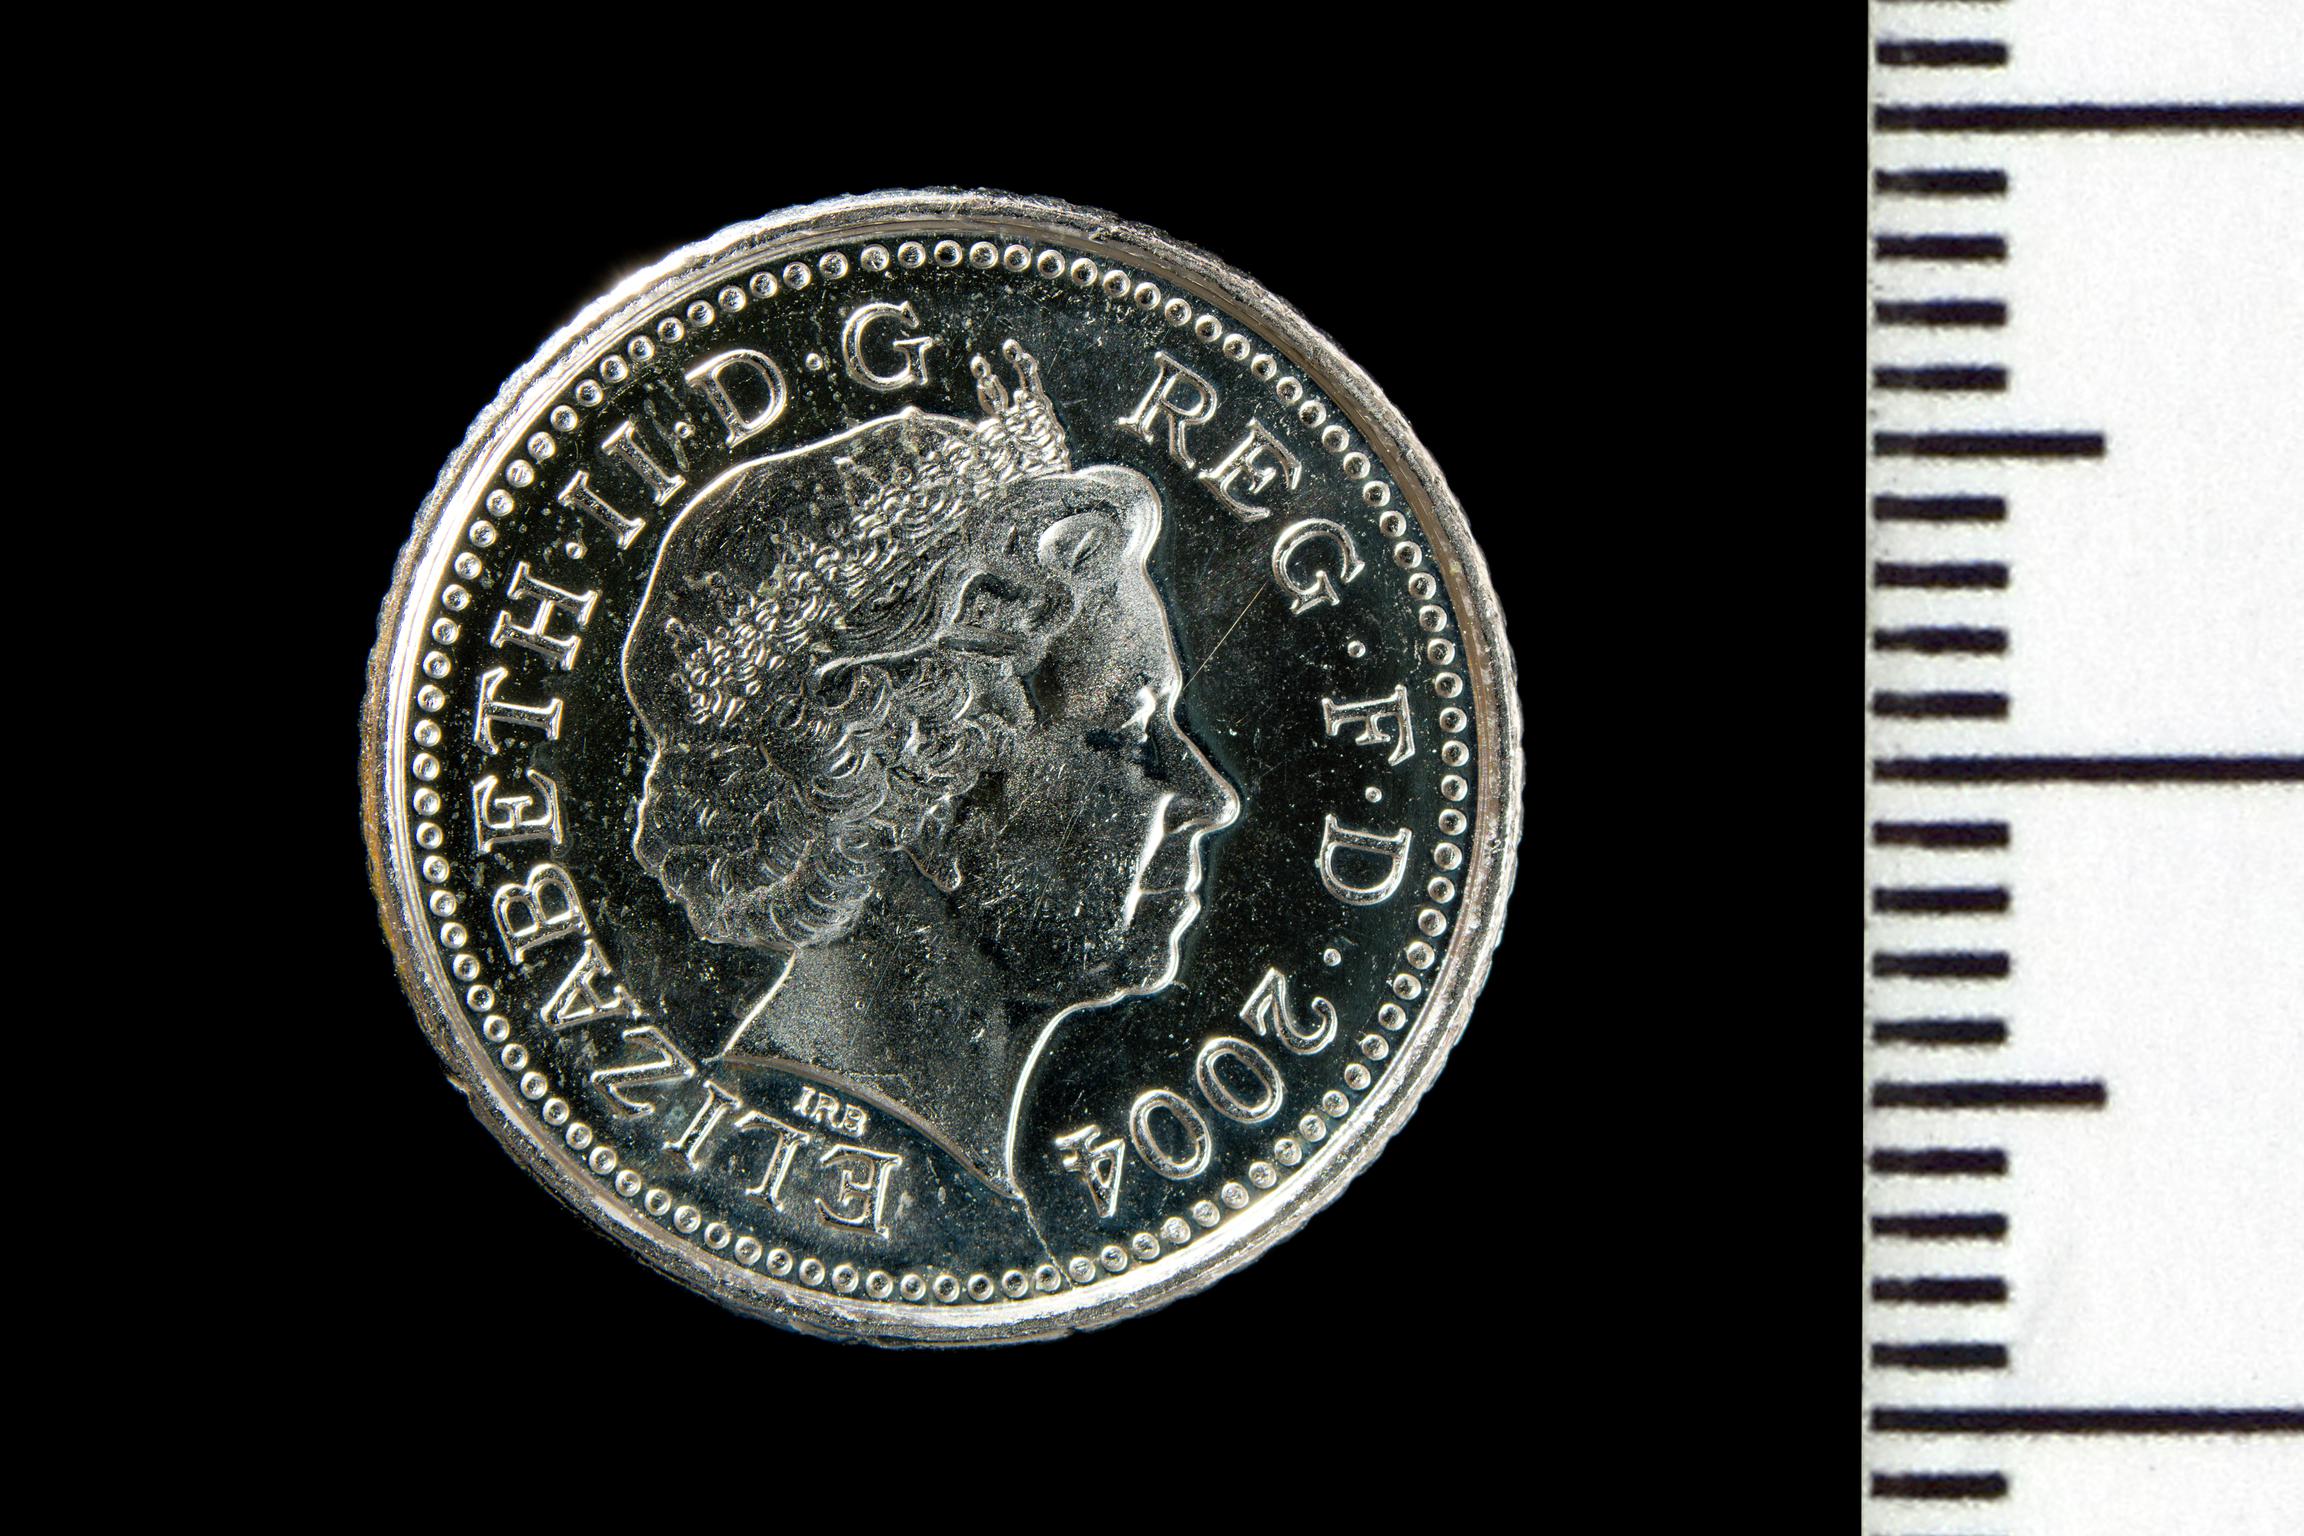 Elizabeth II five pence